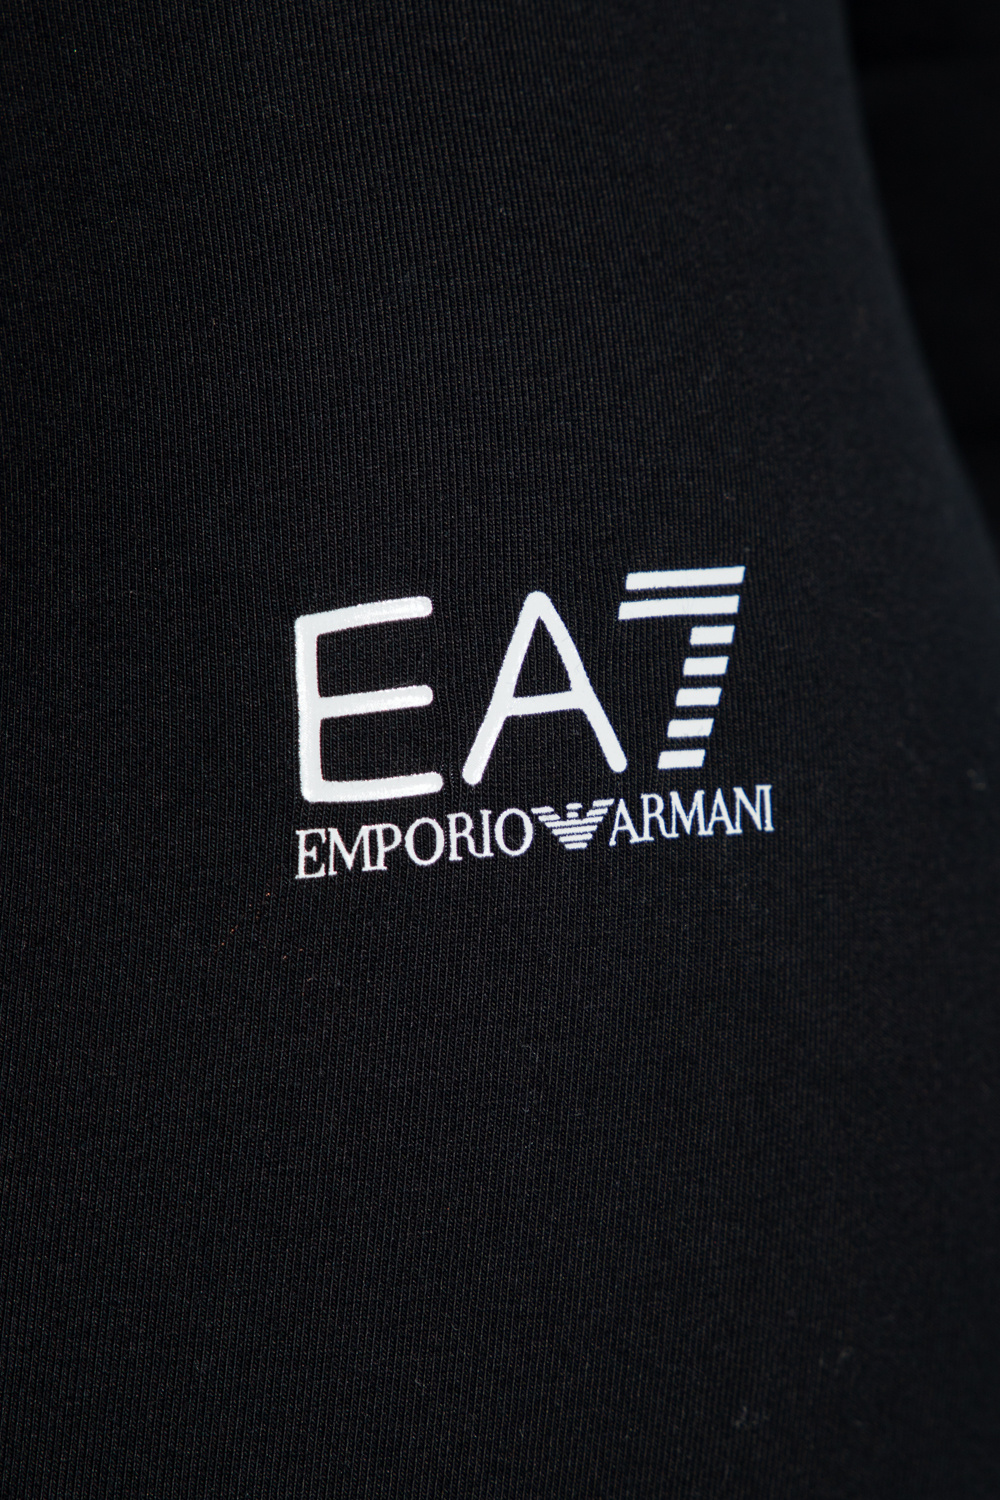 EA7 Emporio Armani flip flops emporio armani x3qs07 xm764 n611 black black wht blk